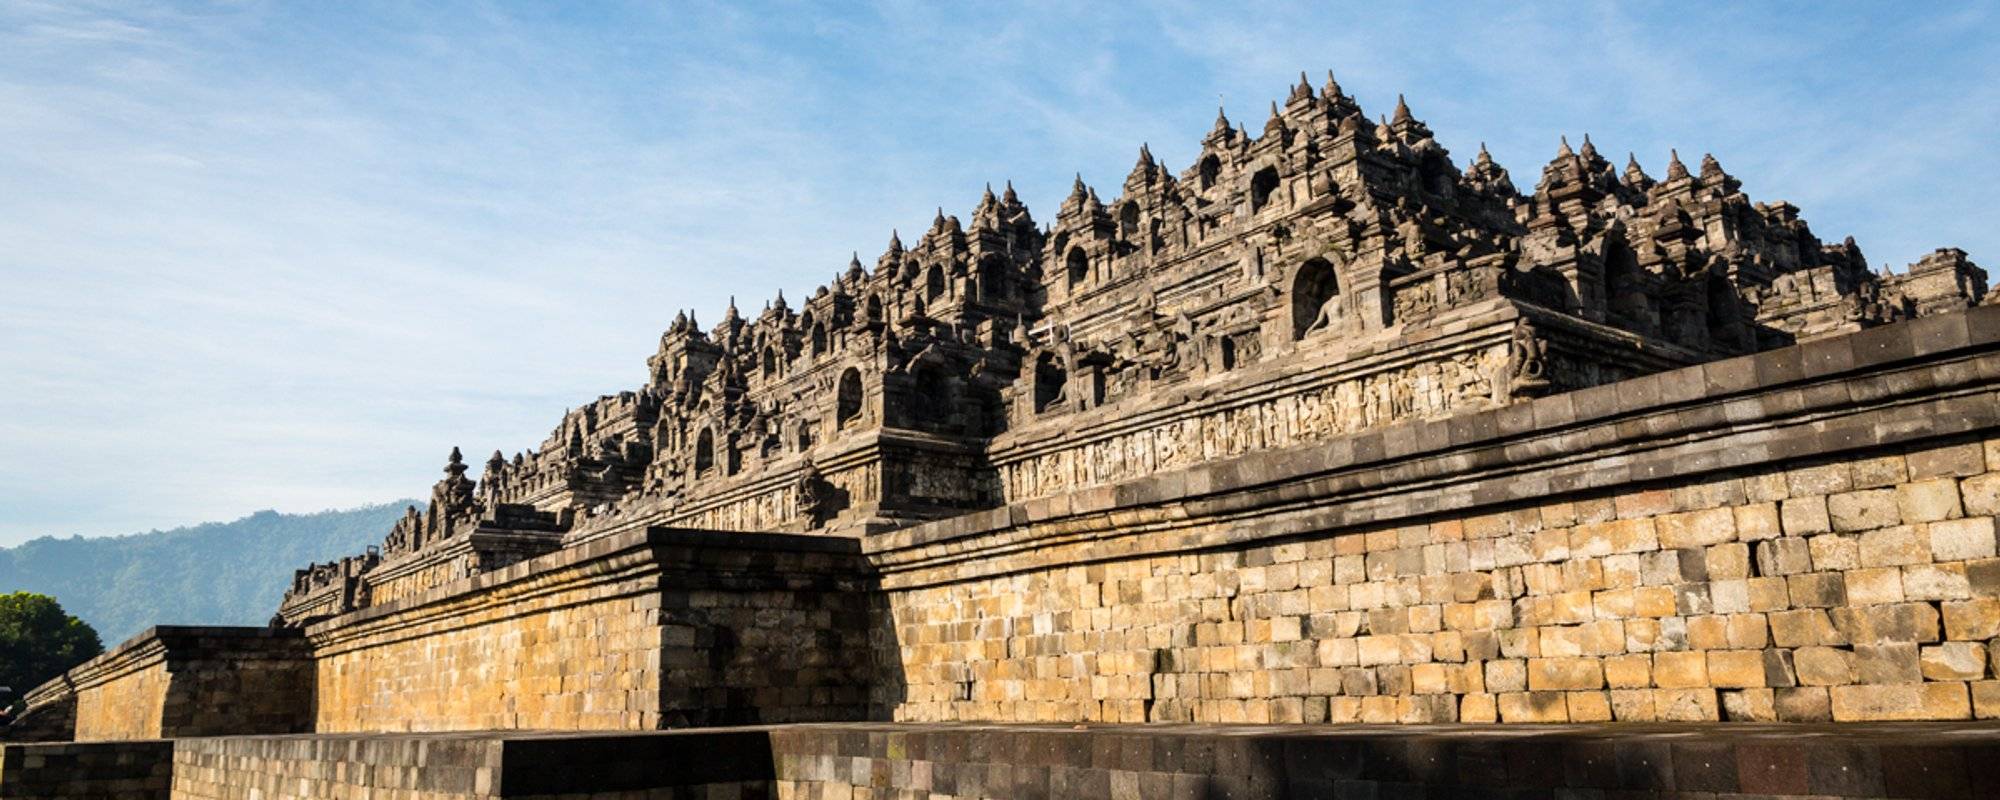 Borobudur Temple, Central Java, Indonesia - #BeautifulSunday and #SublimeSunday :)